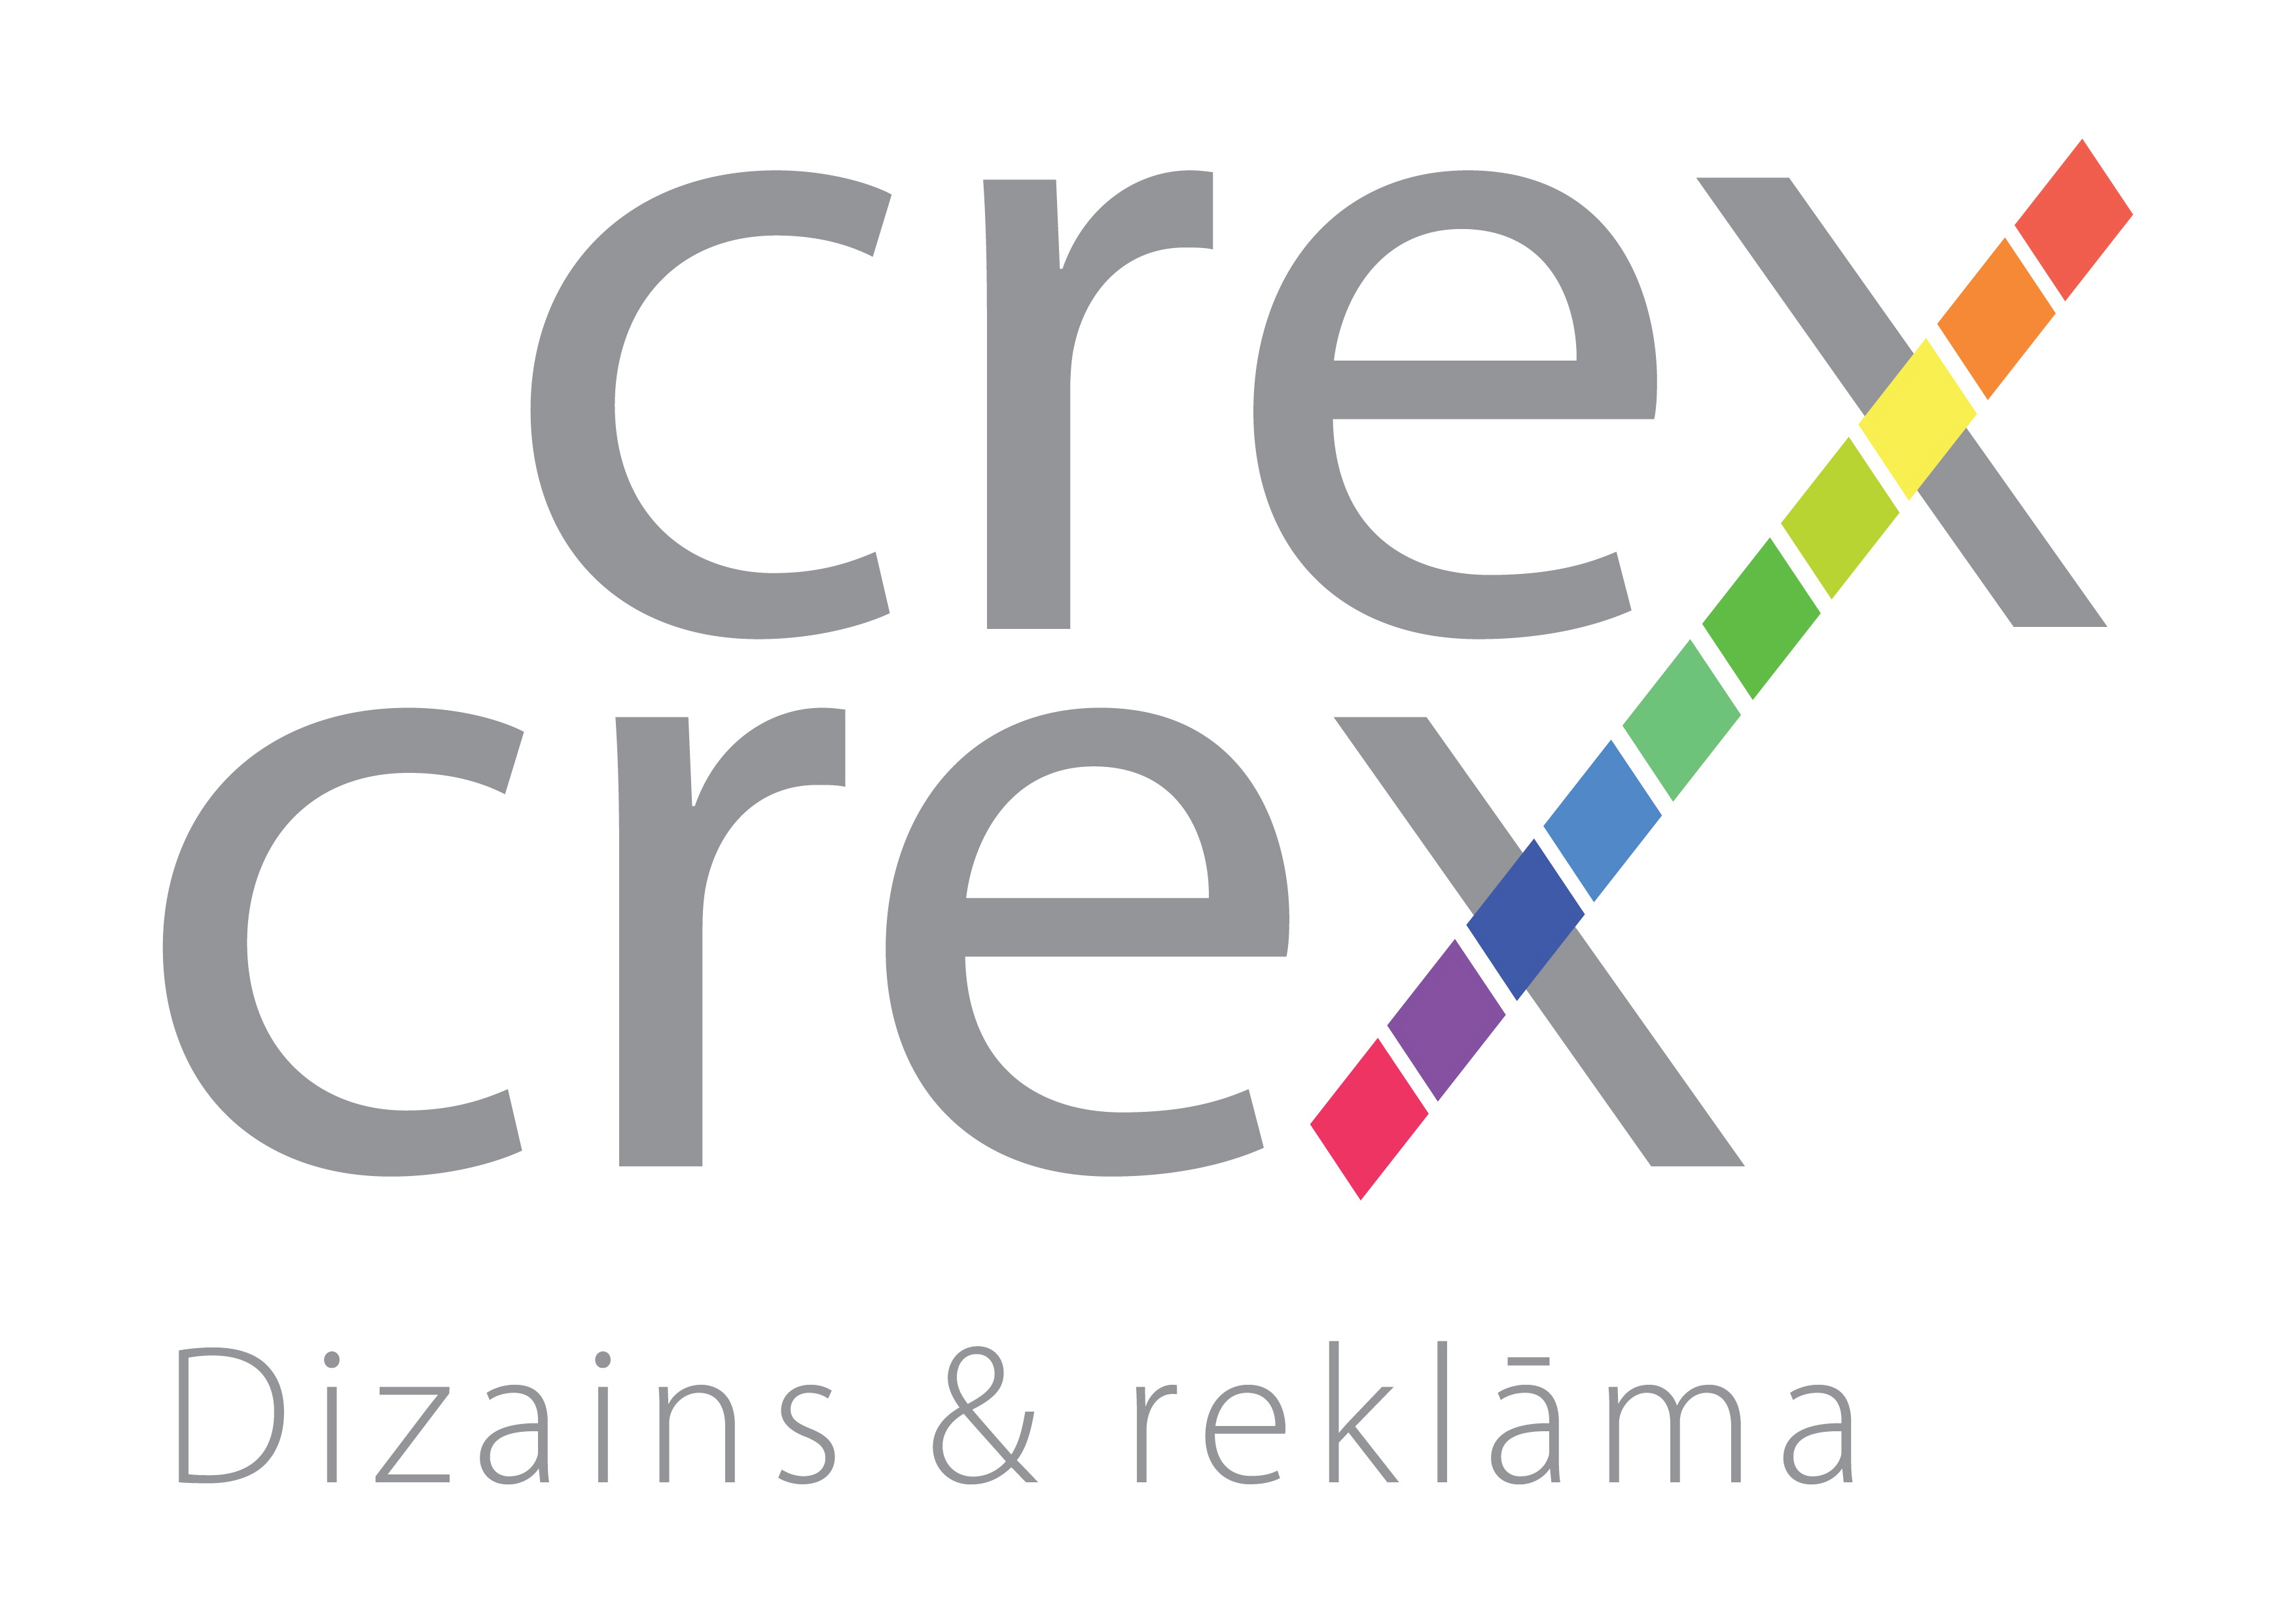 crexcrex